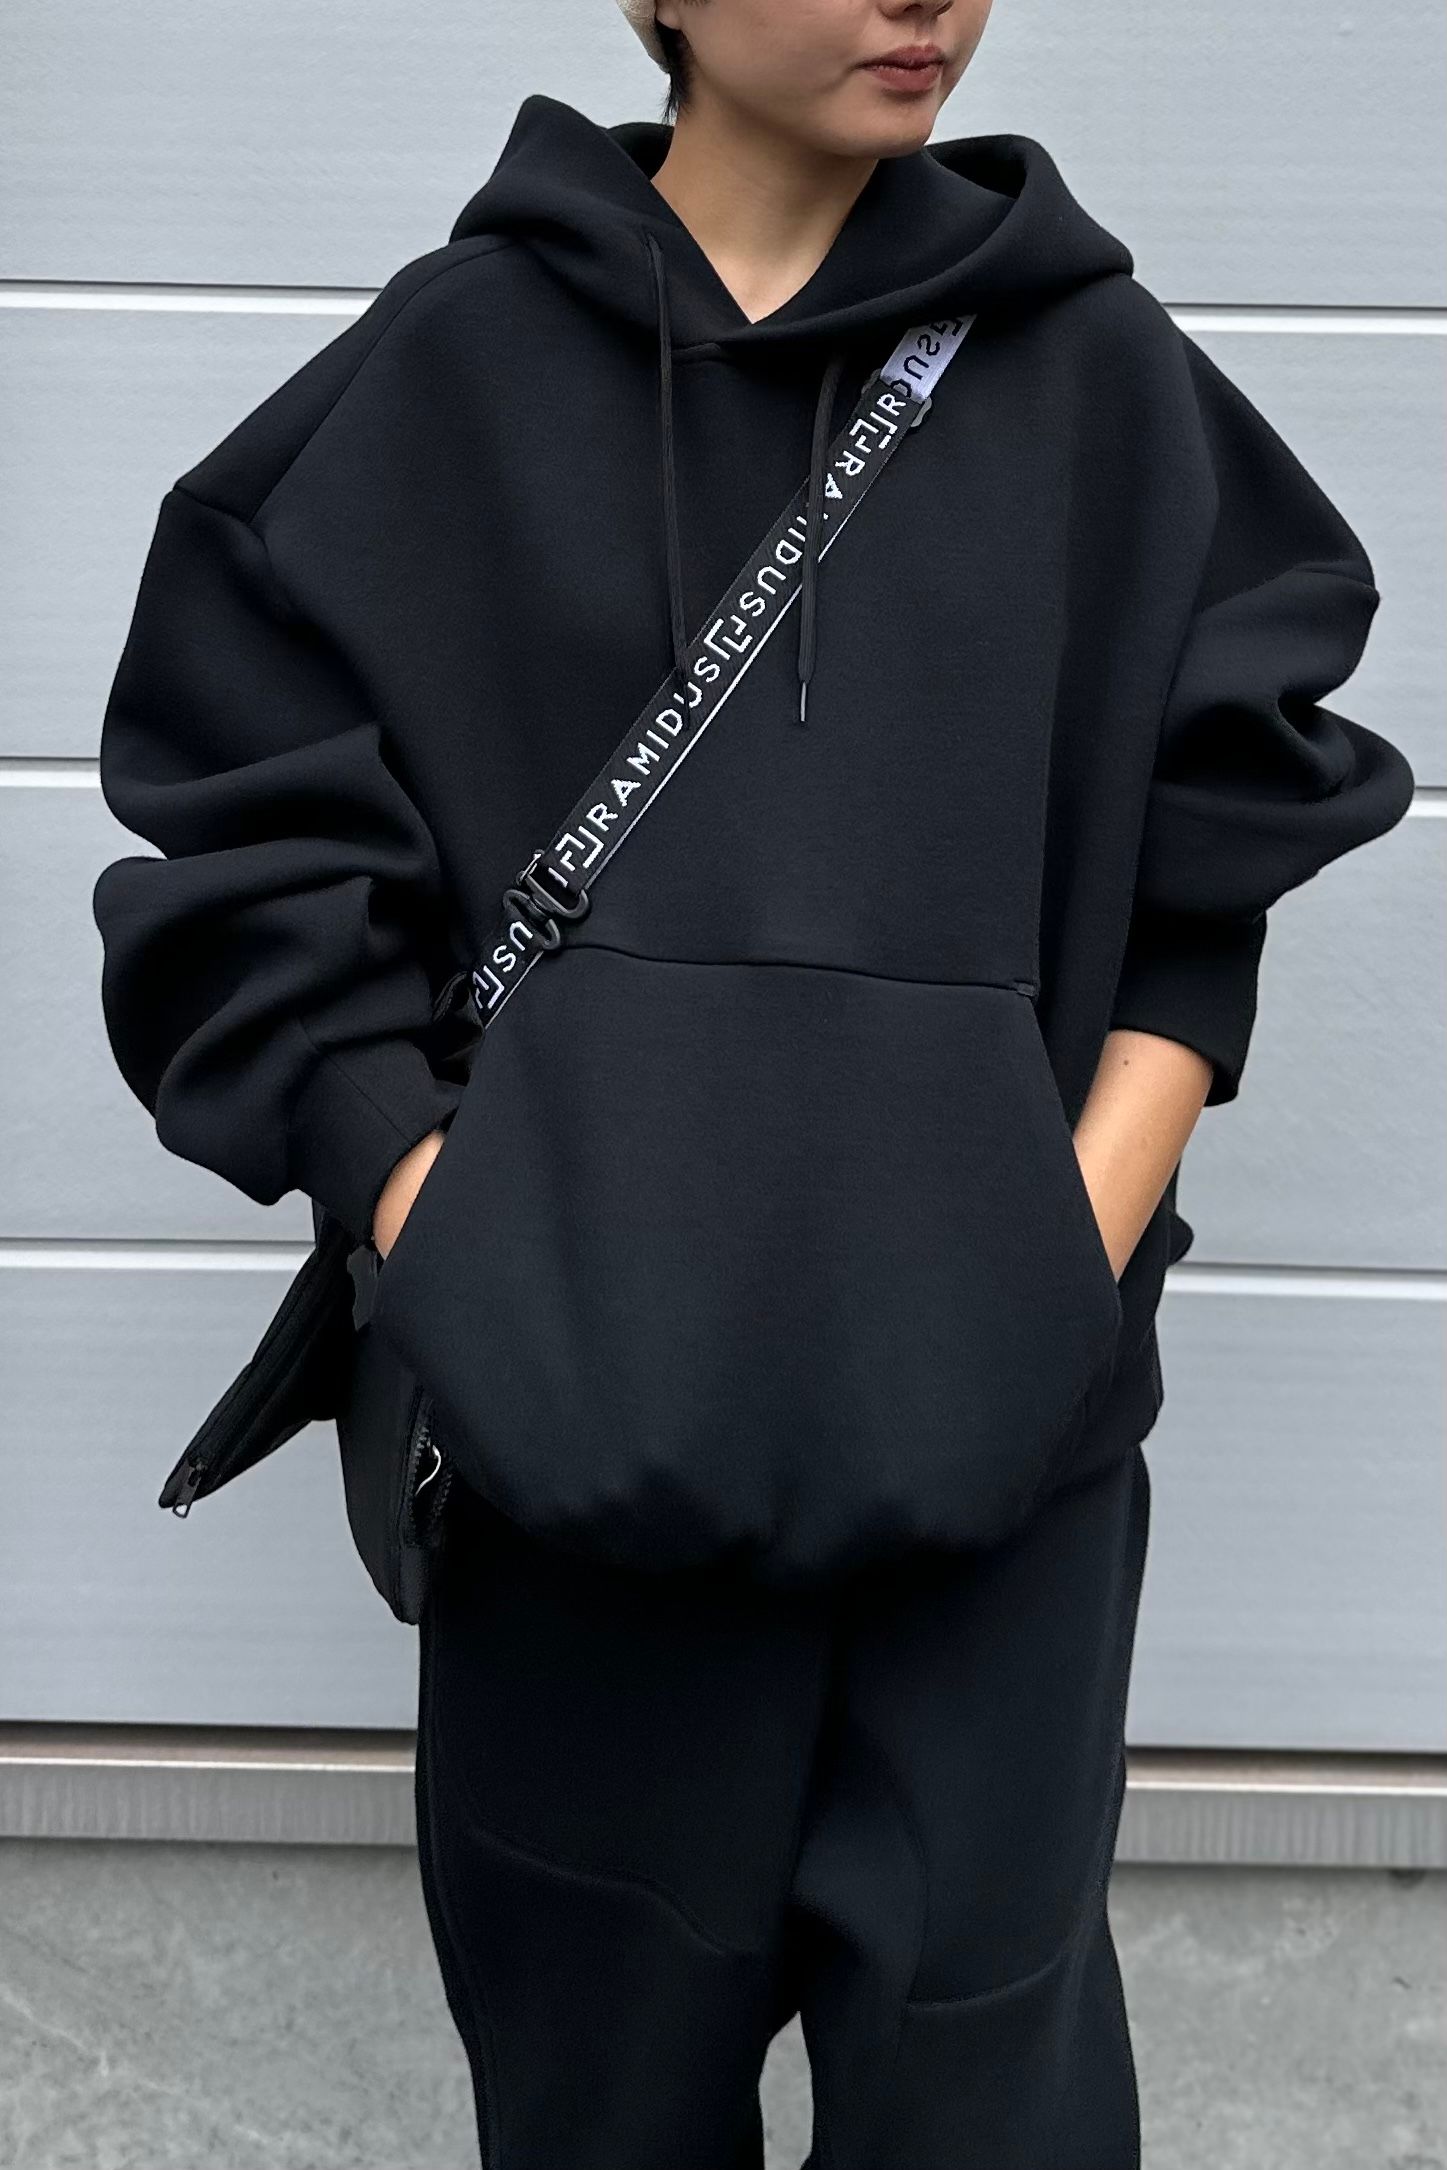 FUMITO GANRYU - Graffiti hoodie -black- 23aw | asterisk